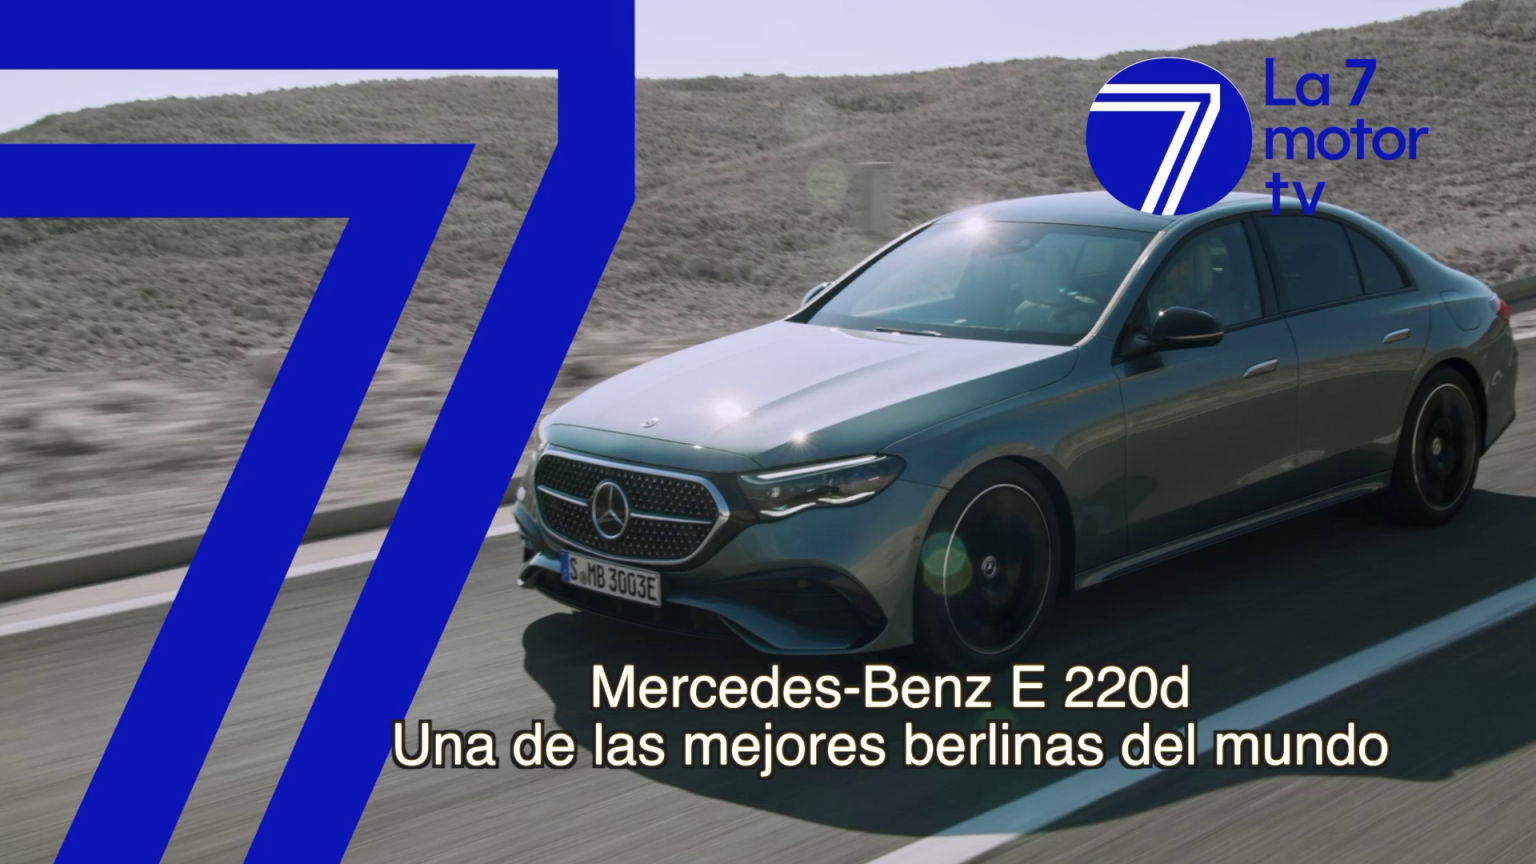 Mercedes-Benz E 220d: una de las mejores berlinas del mundo